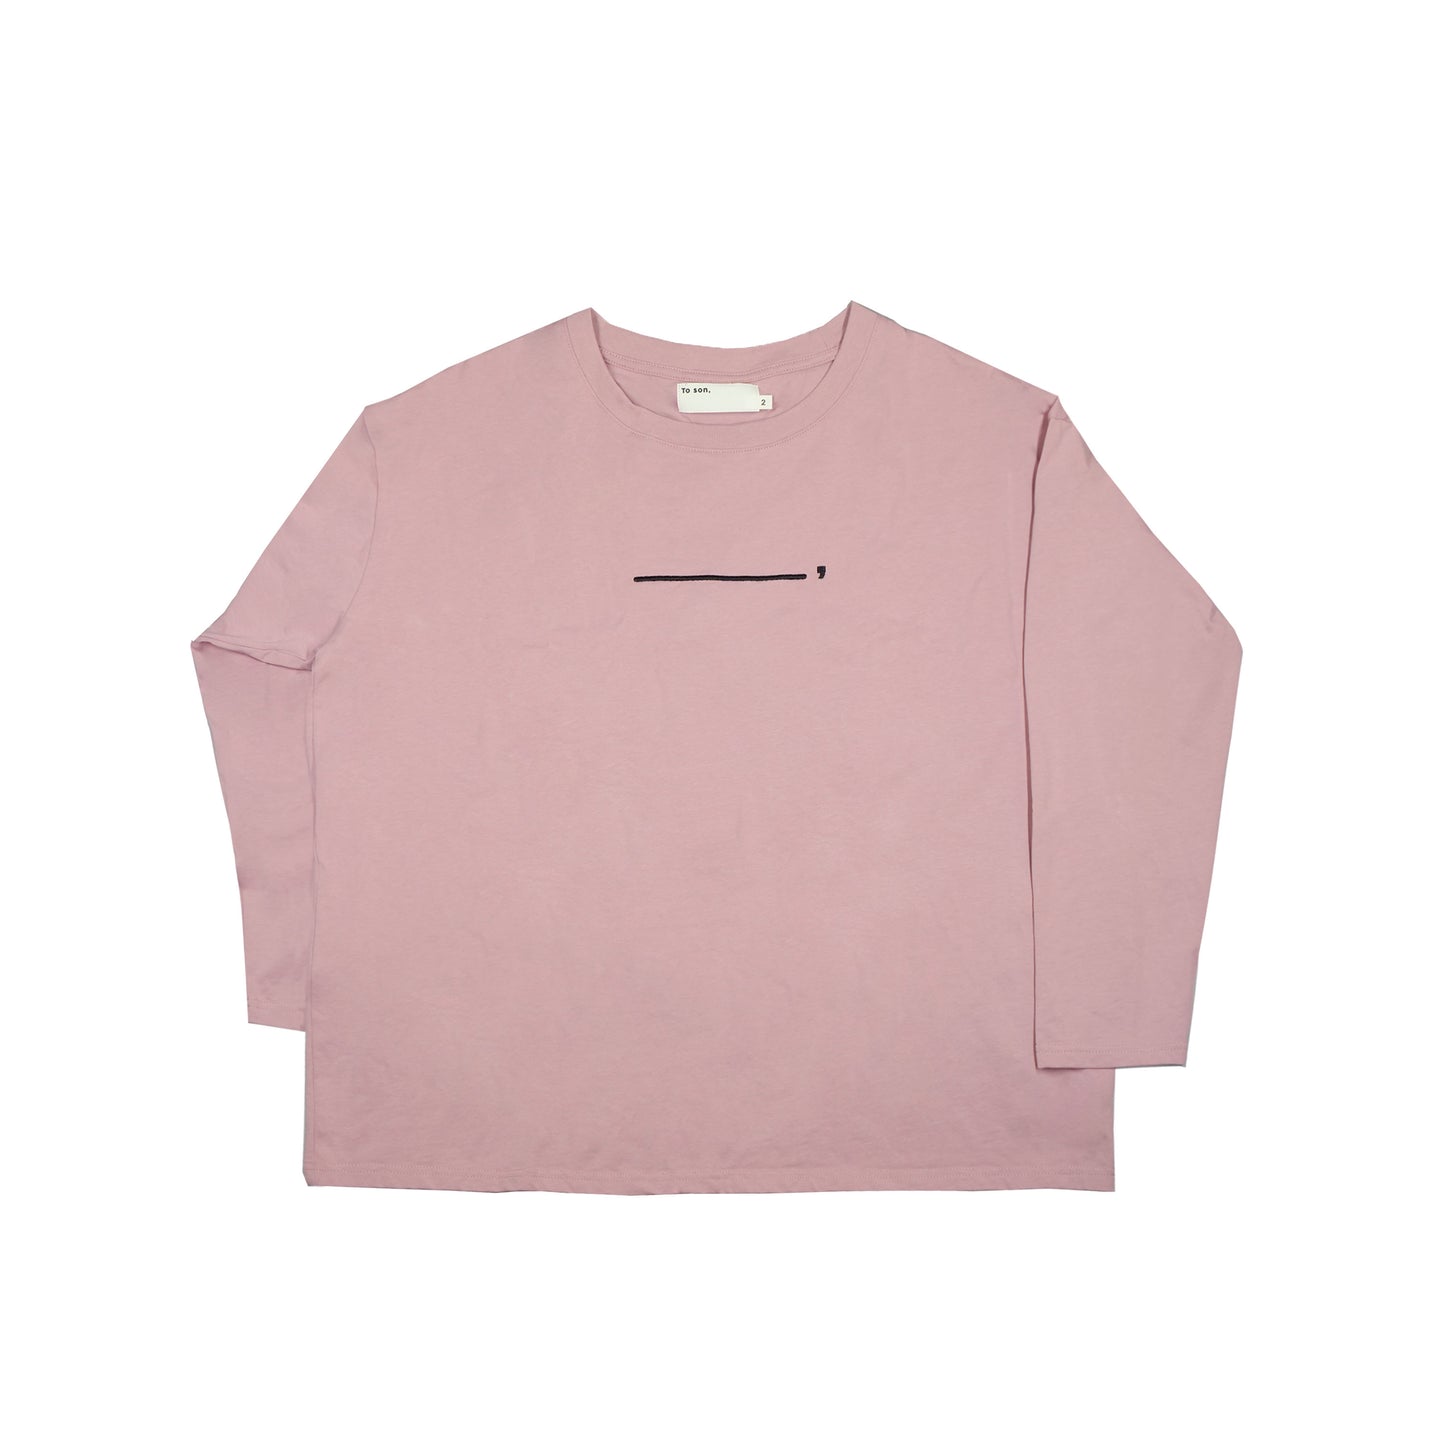 Toson, "LionDance" Patchwork Long Sleeve T-shirt - Pink